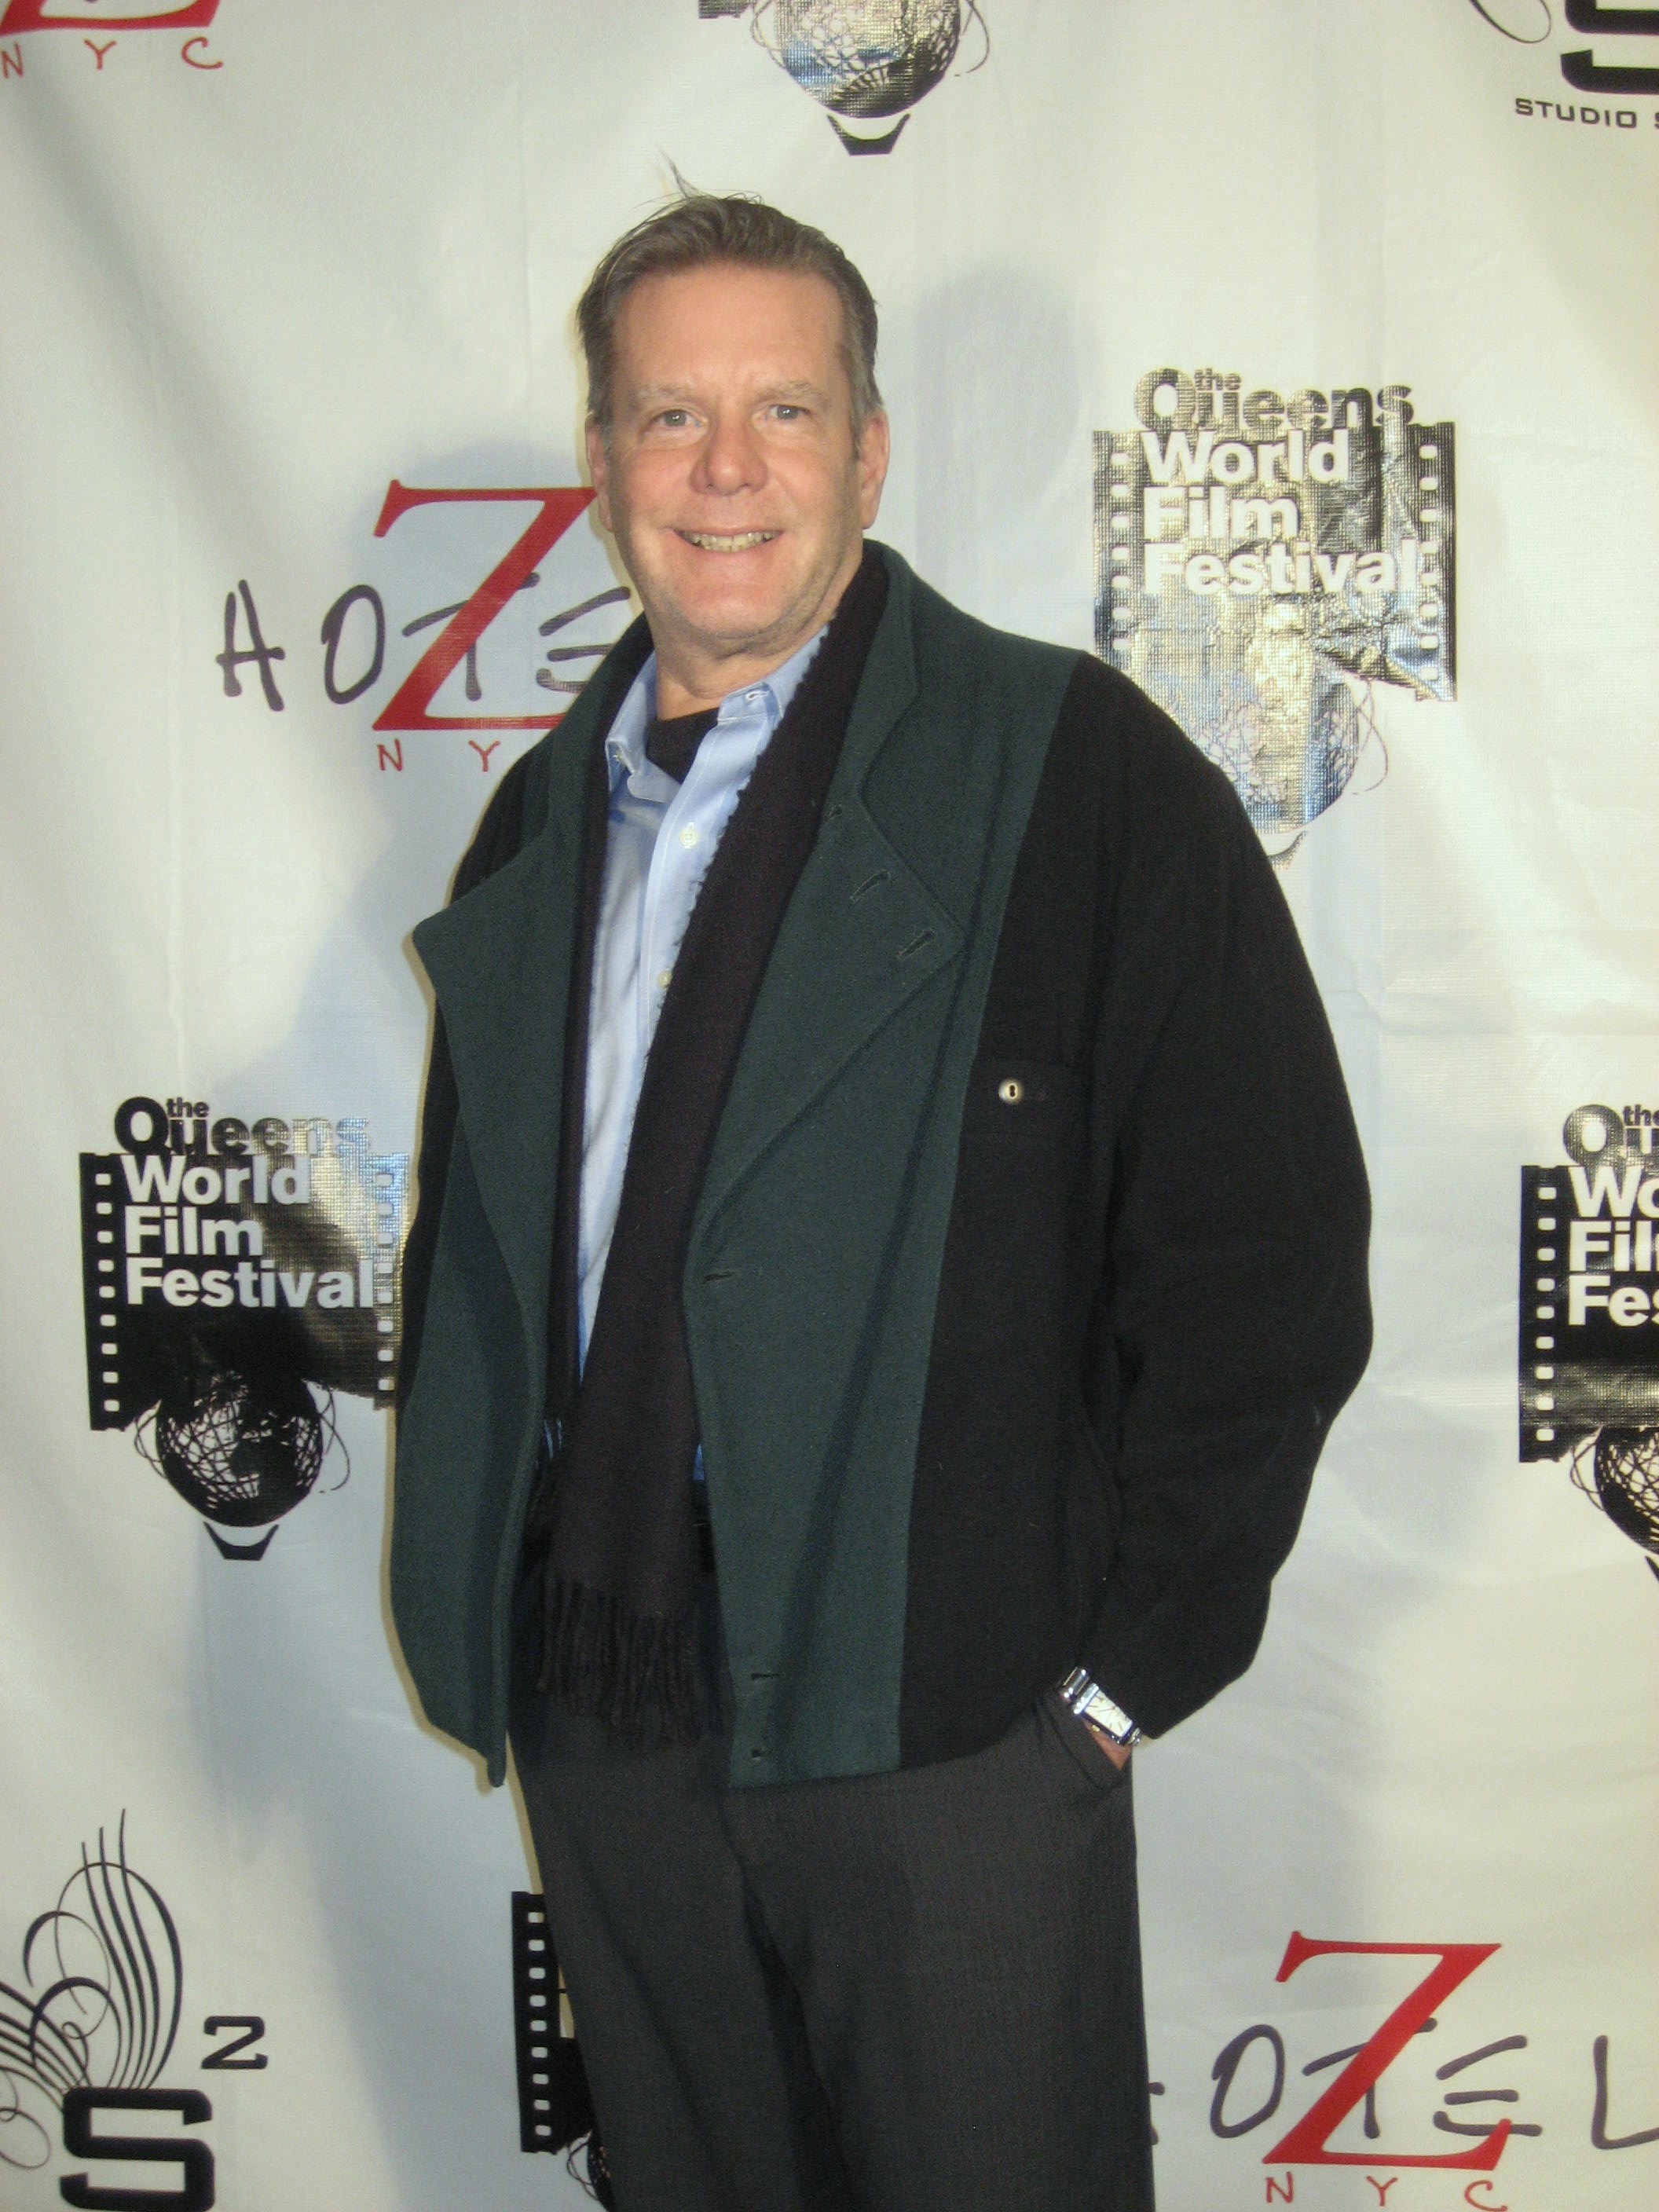 Queens World Film Festival, March 3, 2012.